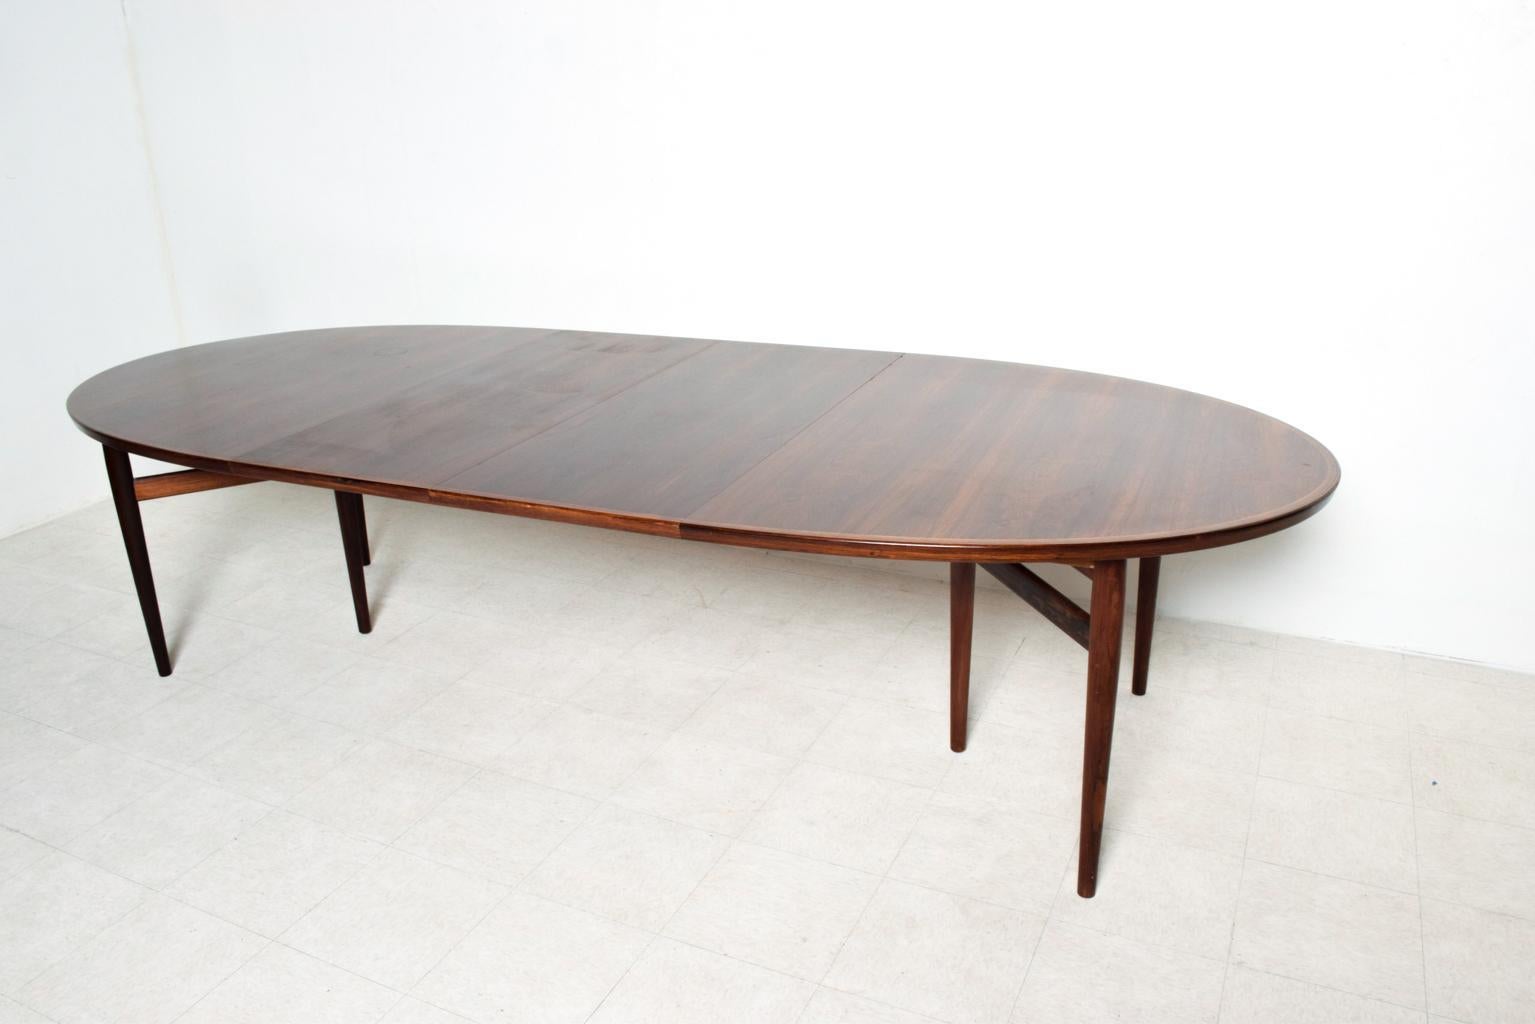 Scandinavian Modern Midcentury Danish Modern Rosewood Oval Dining Table by Arne Vodder for SIBAST